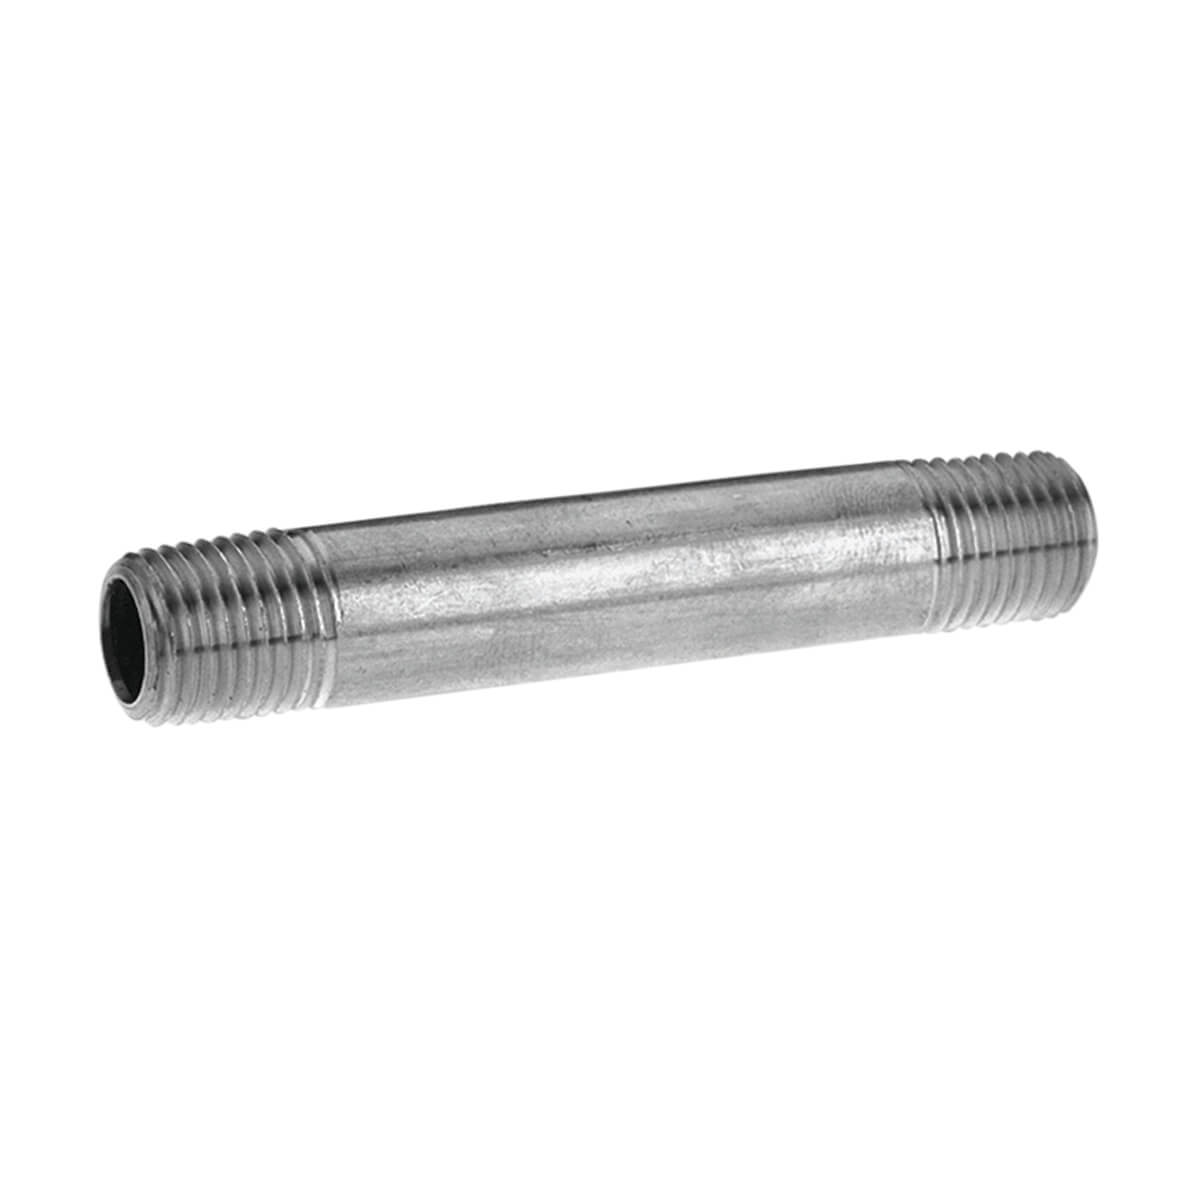 Pipe Nipple Galvanized Steel - 3/4-in x 48-in